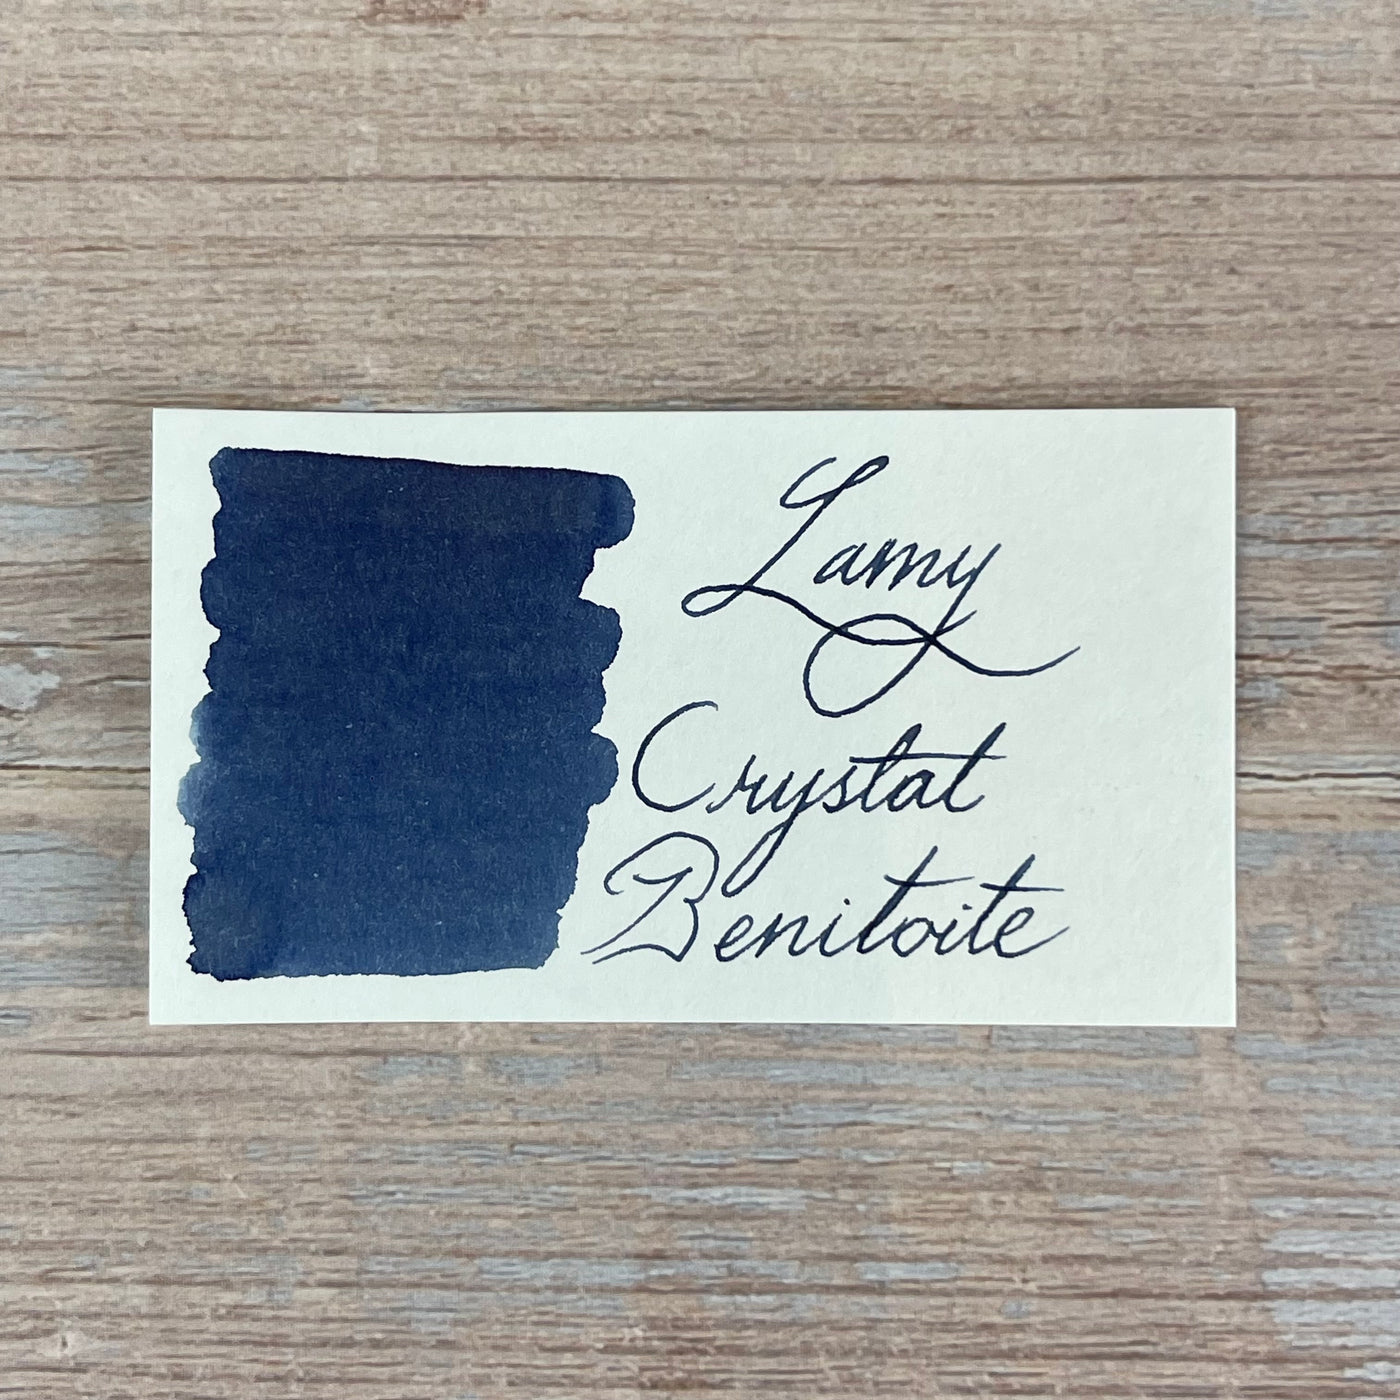 Lamy Crystal Benitoite Ink